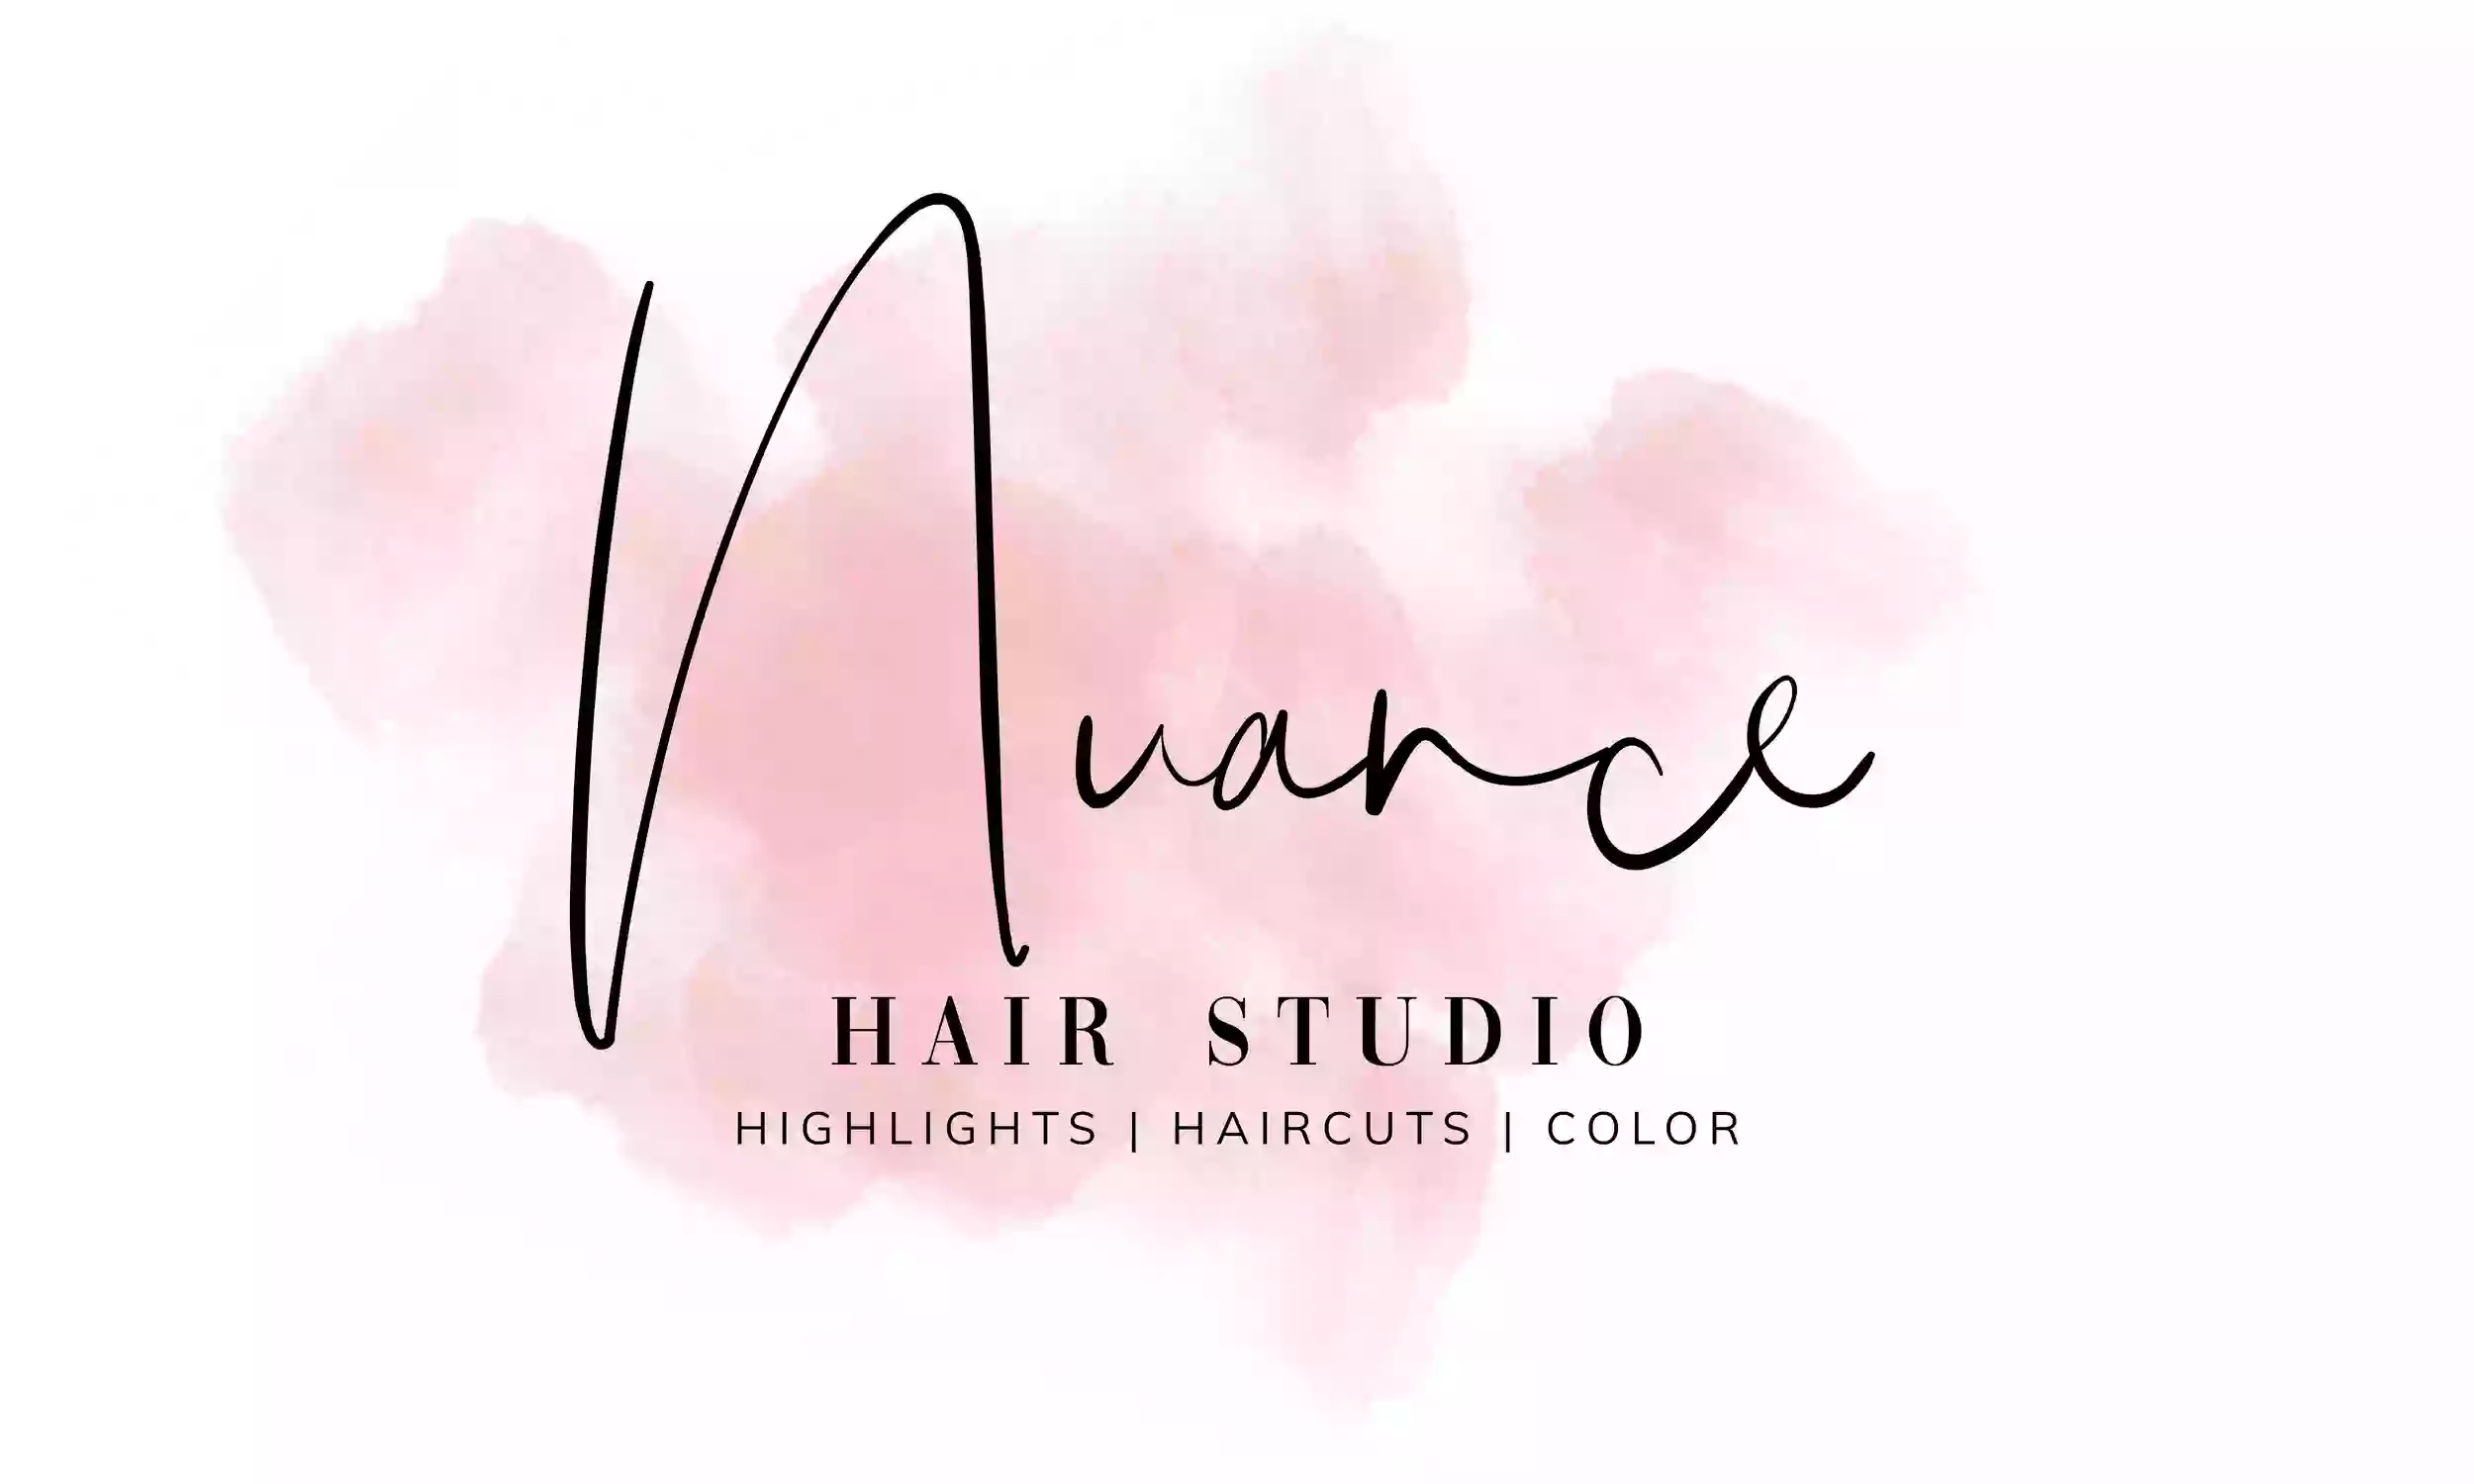 Nuance Hair Studio